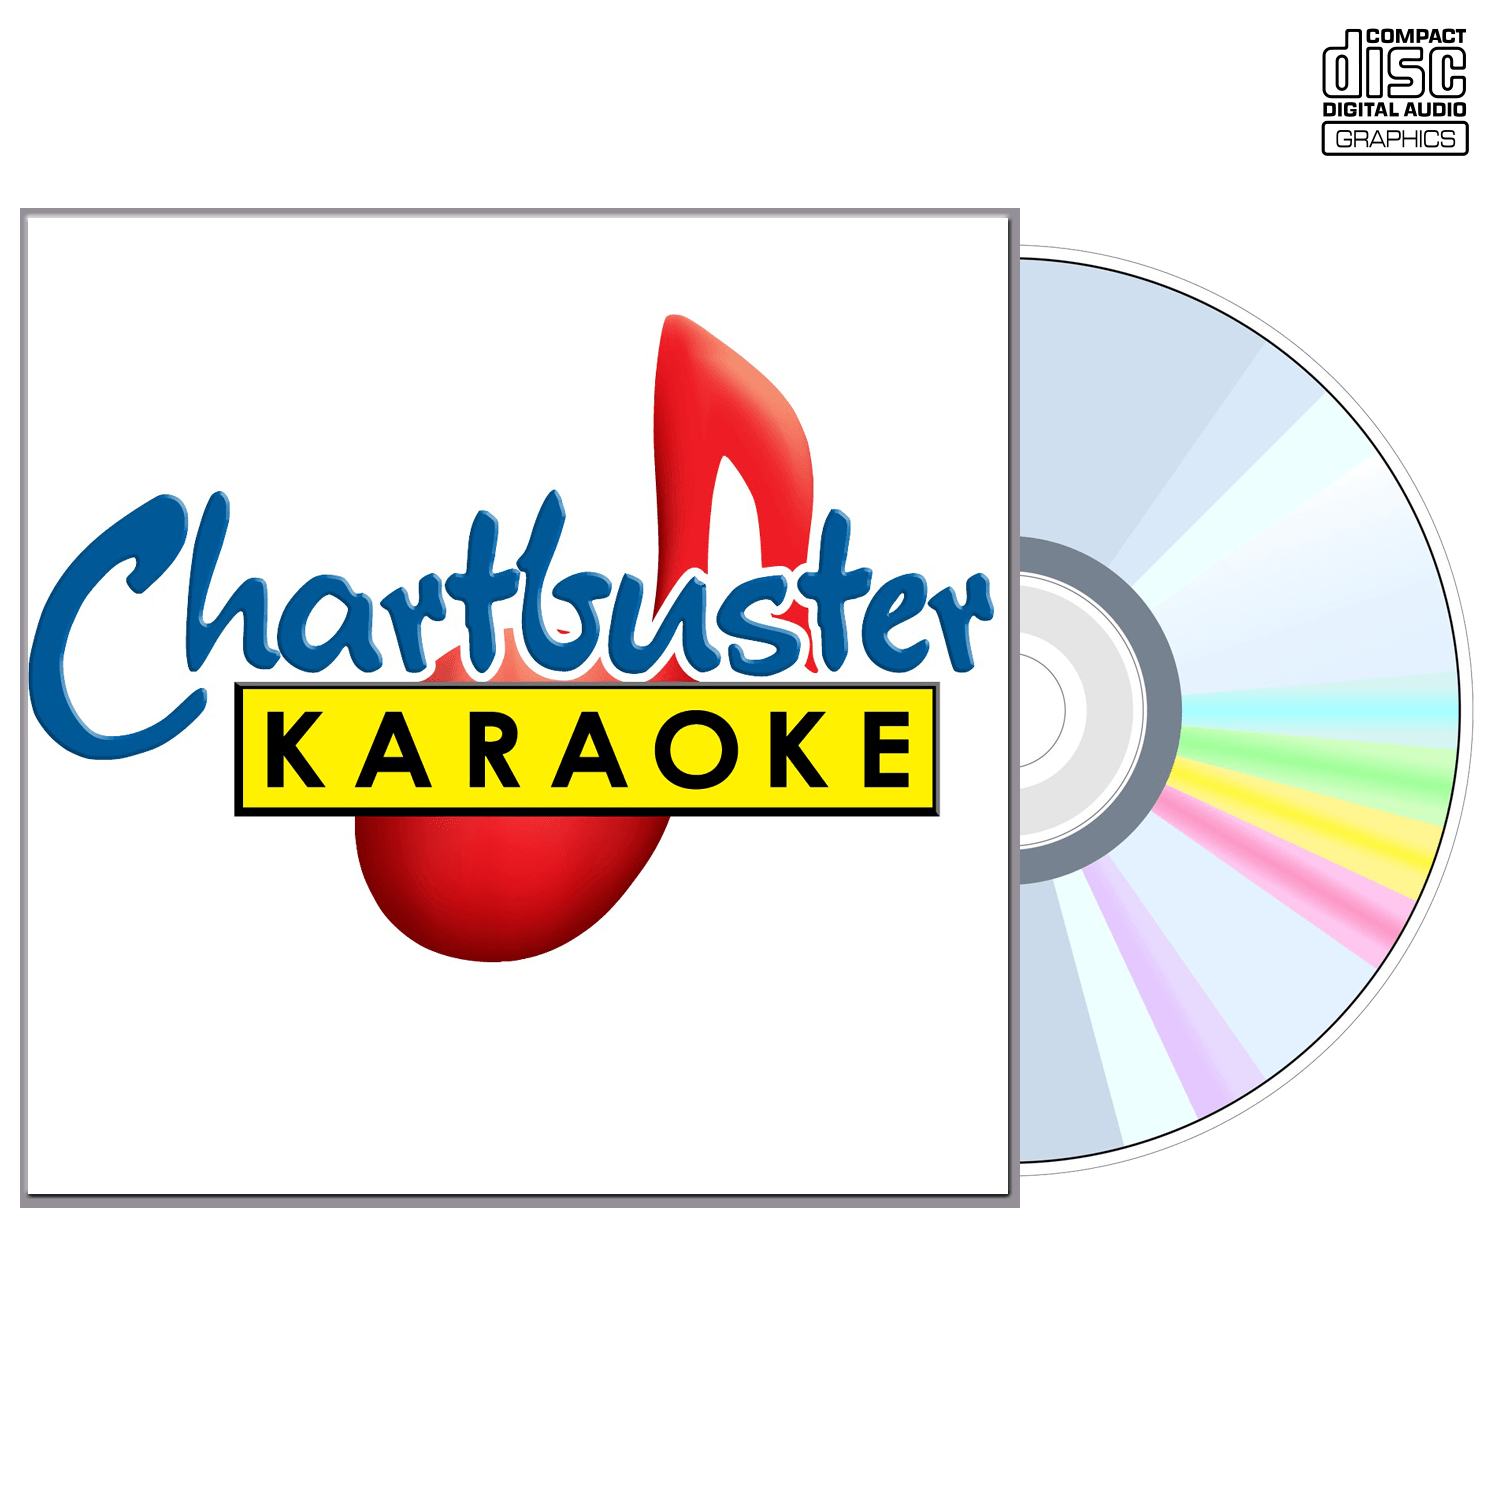 Don Williams Vol 2 - CD+G - Chartbuster Karaoke - Karaoke Home Entertainment